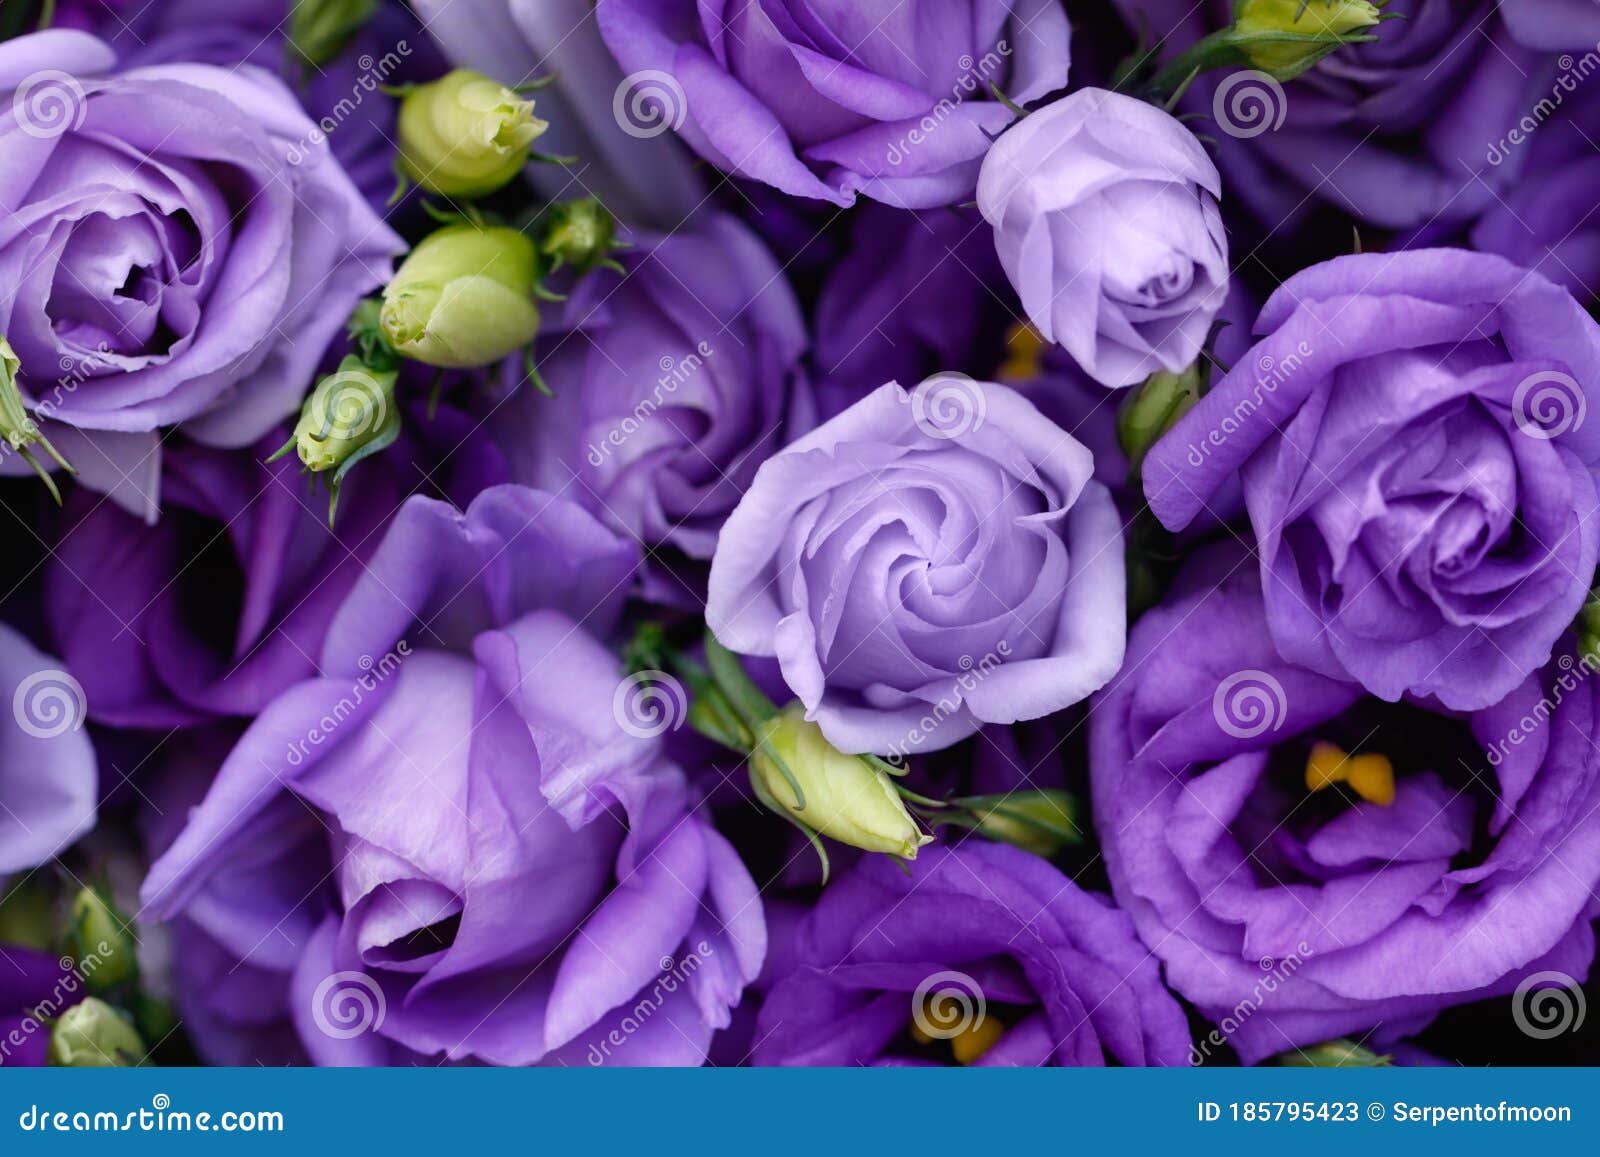 Beautiful Purple Roses Background Stock Image - Image of bloom ...